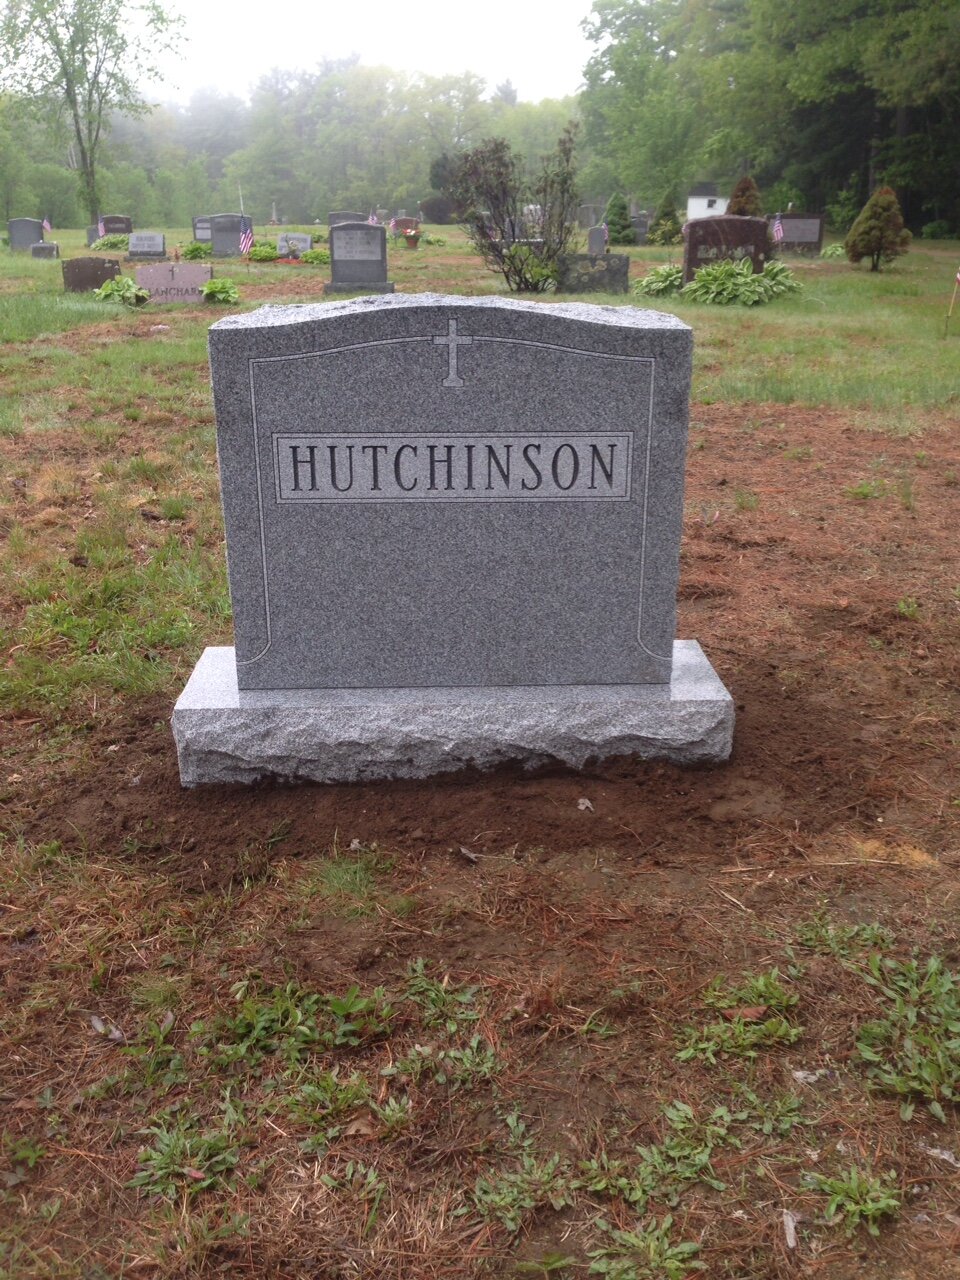 HUTCHINSON front.JPG